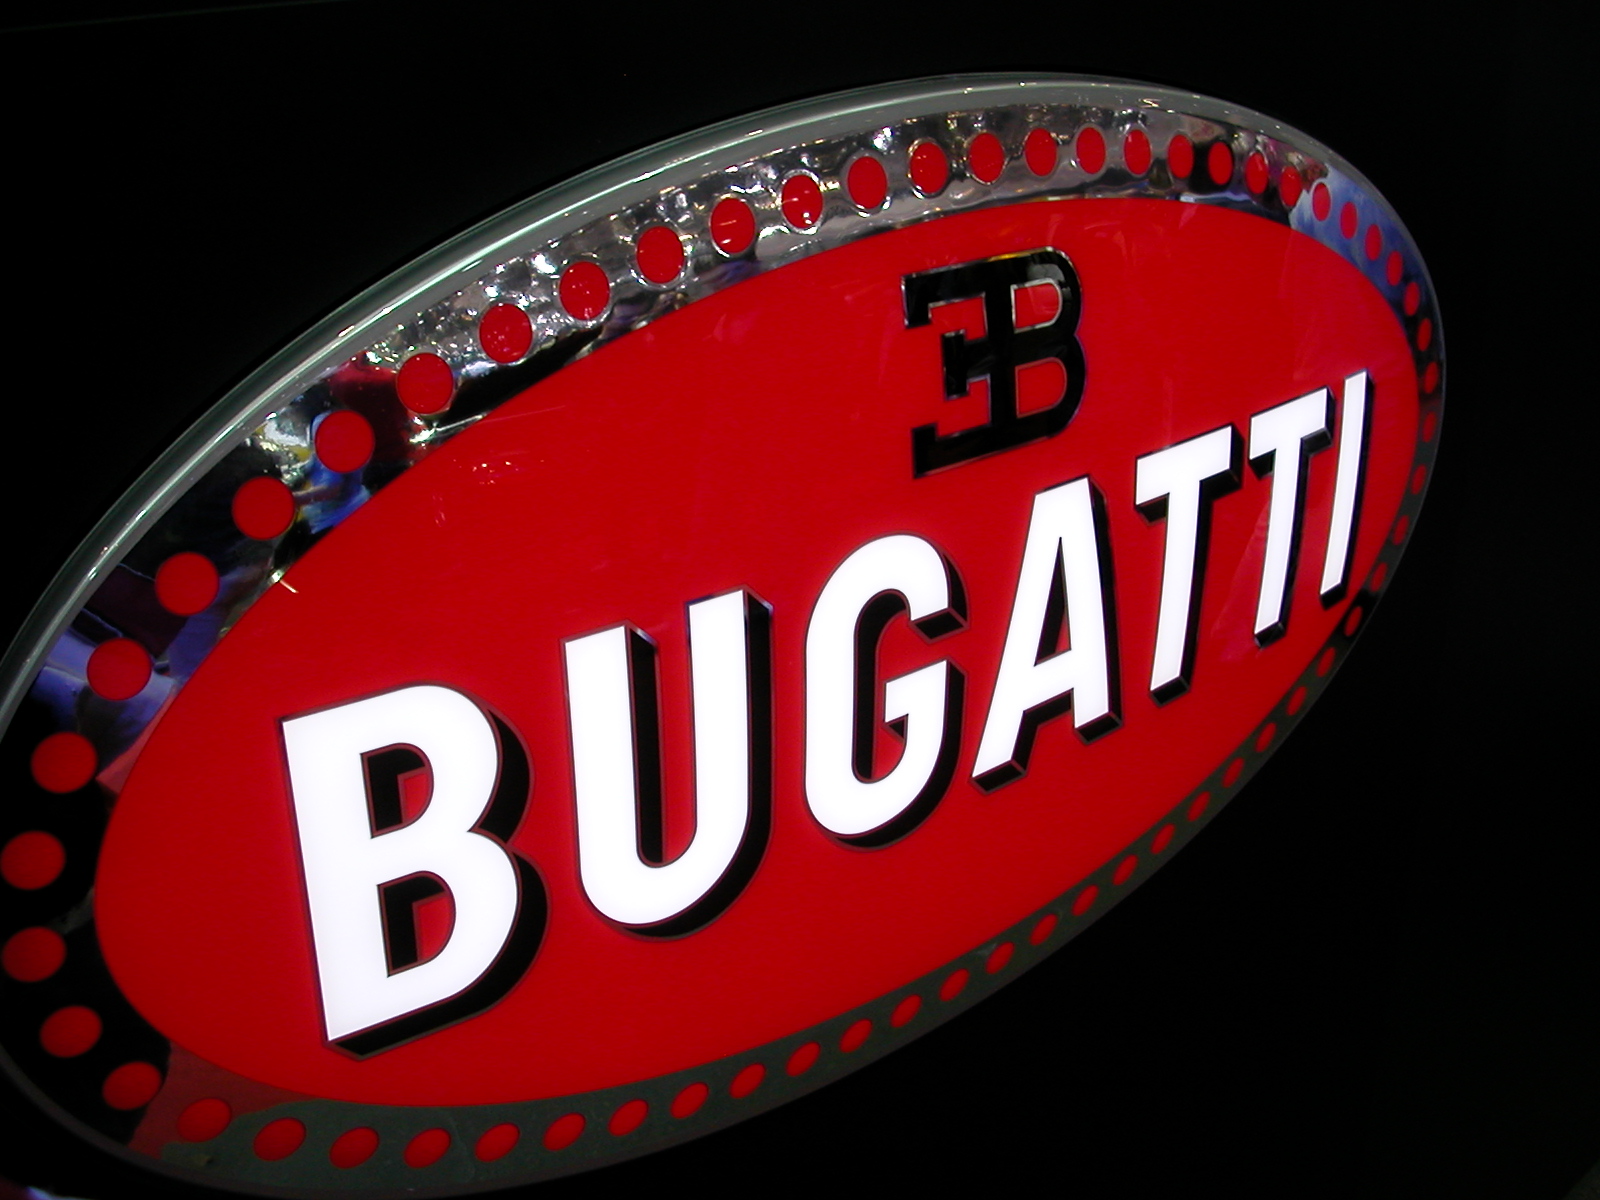 Bugatti Logo Wallpaper For Iphone - johnywheels.com